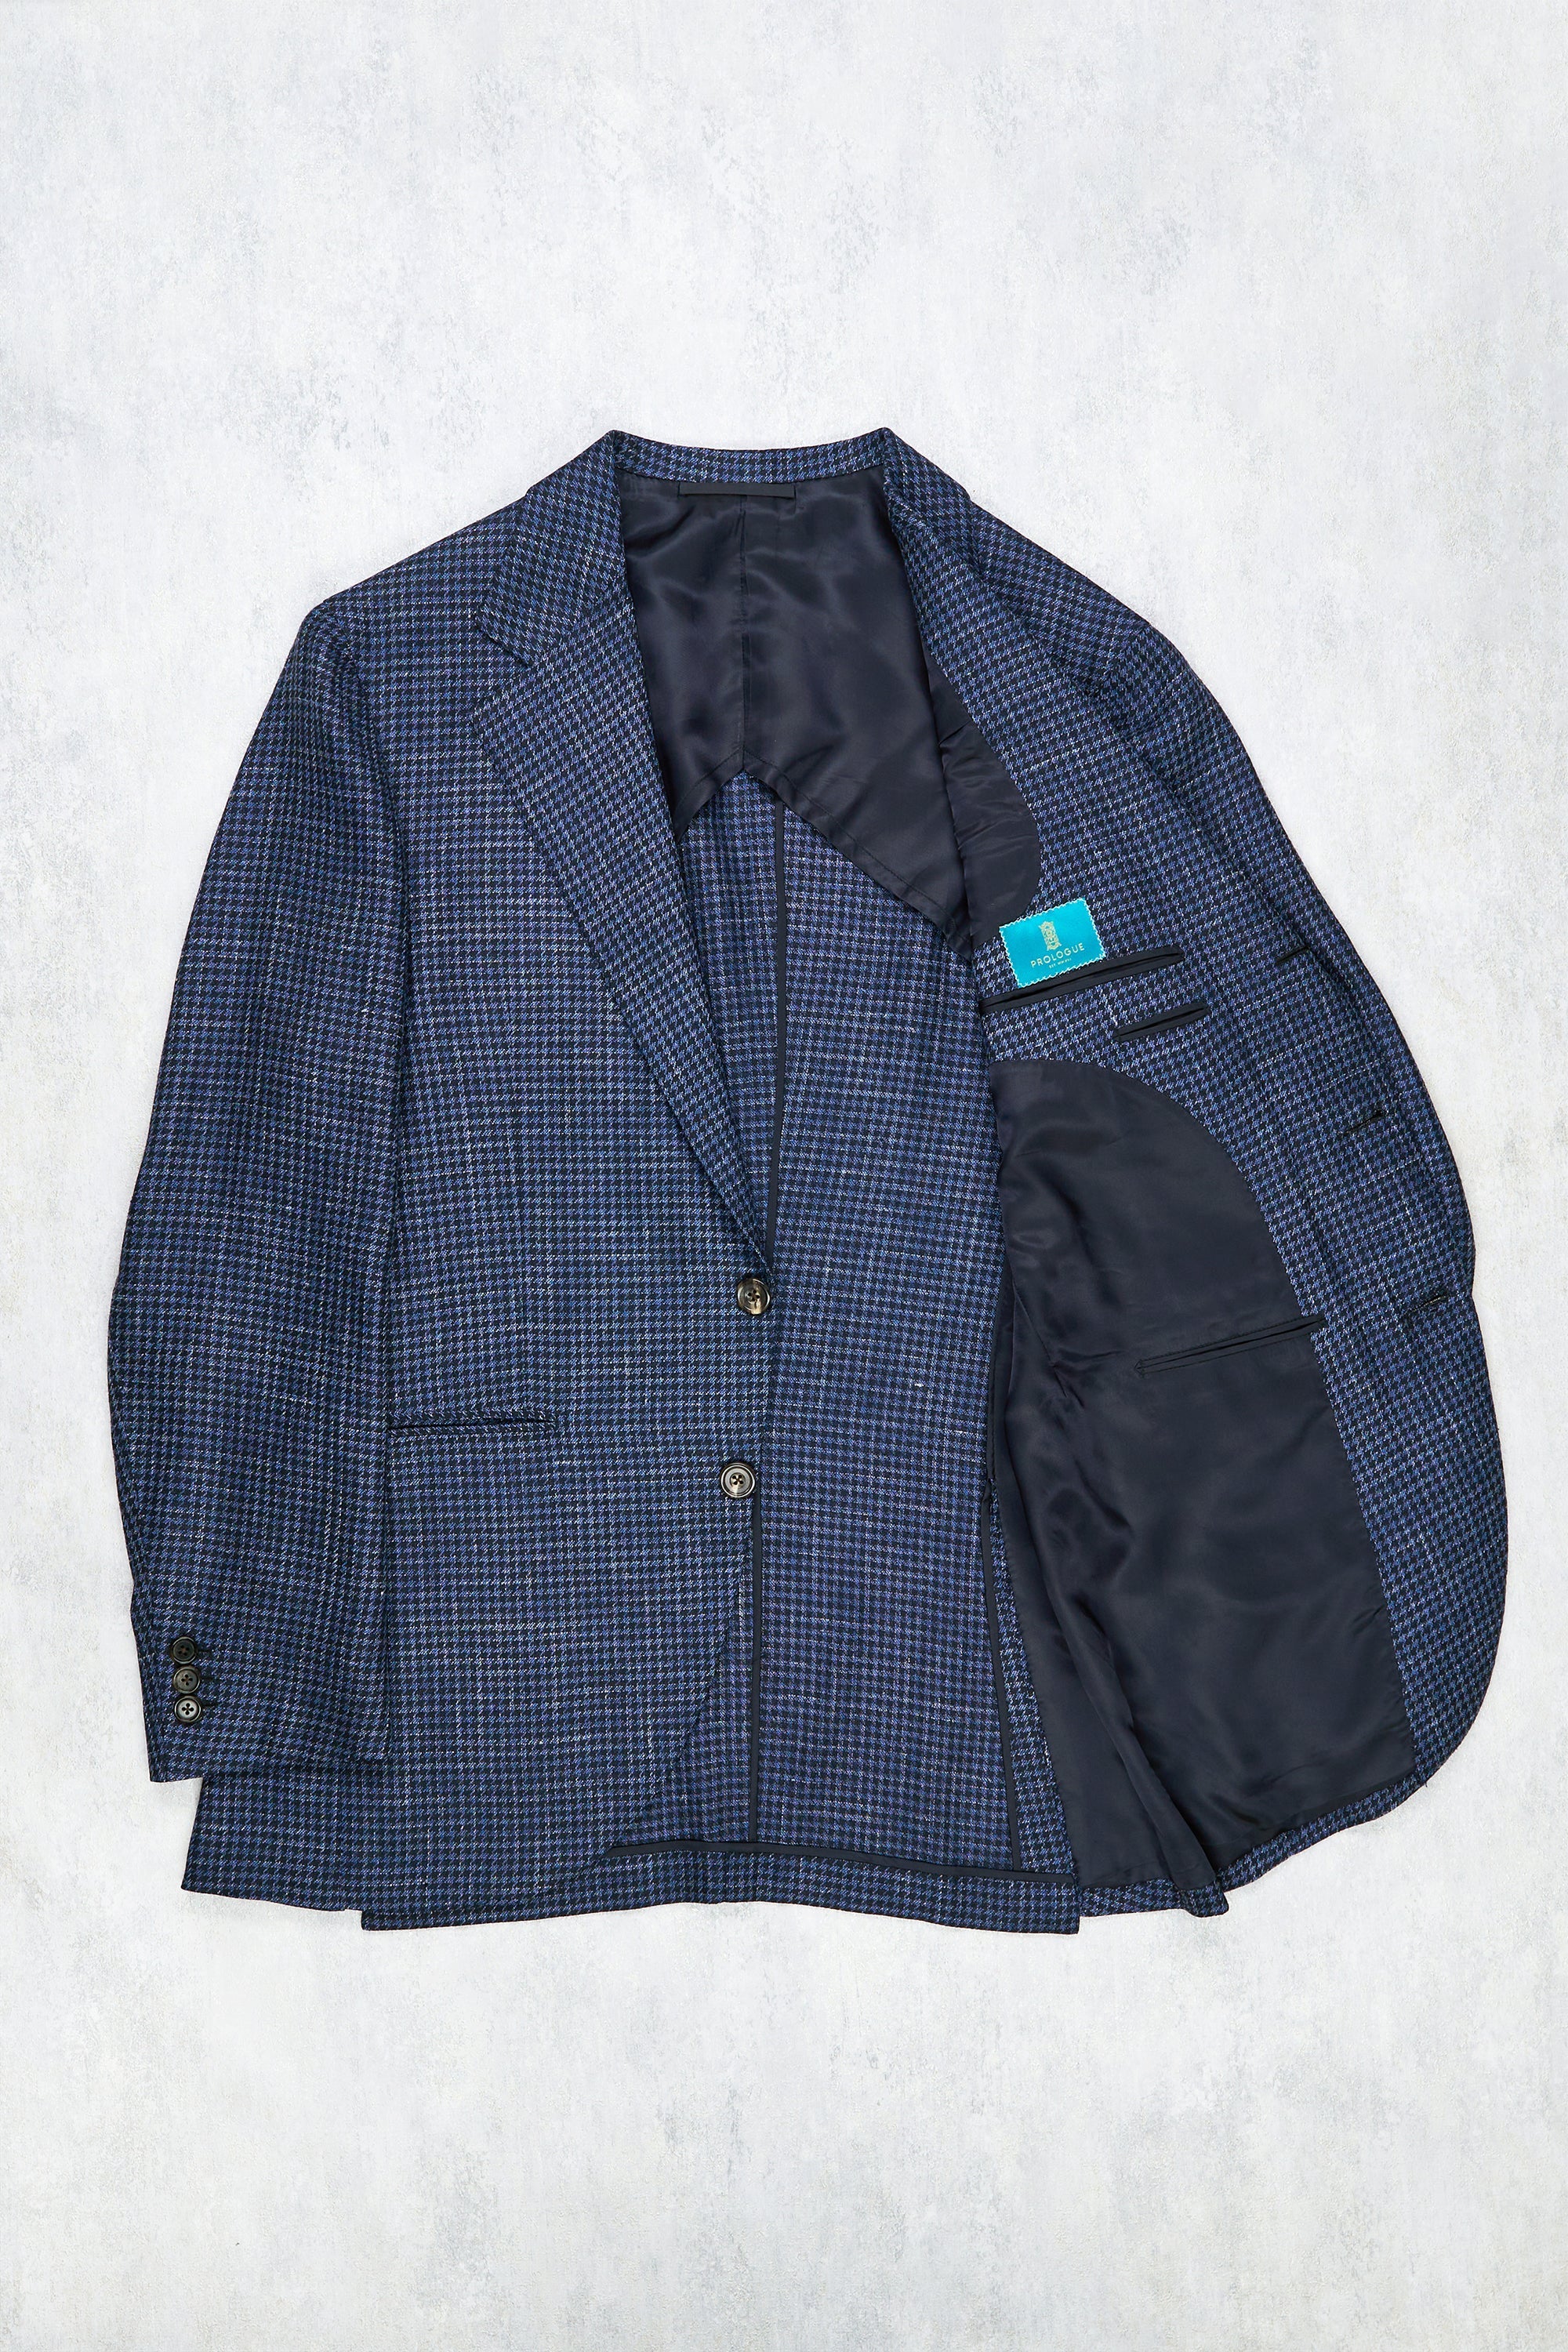 Prologue Blue/Black Houndstooth Wool Sport Coat